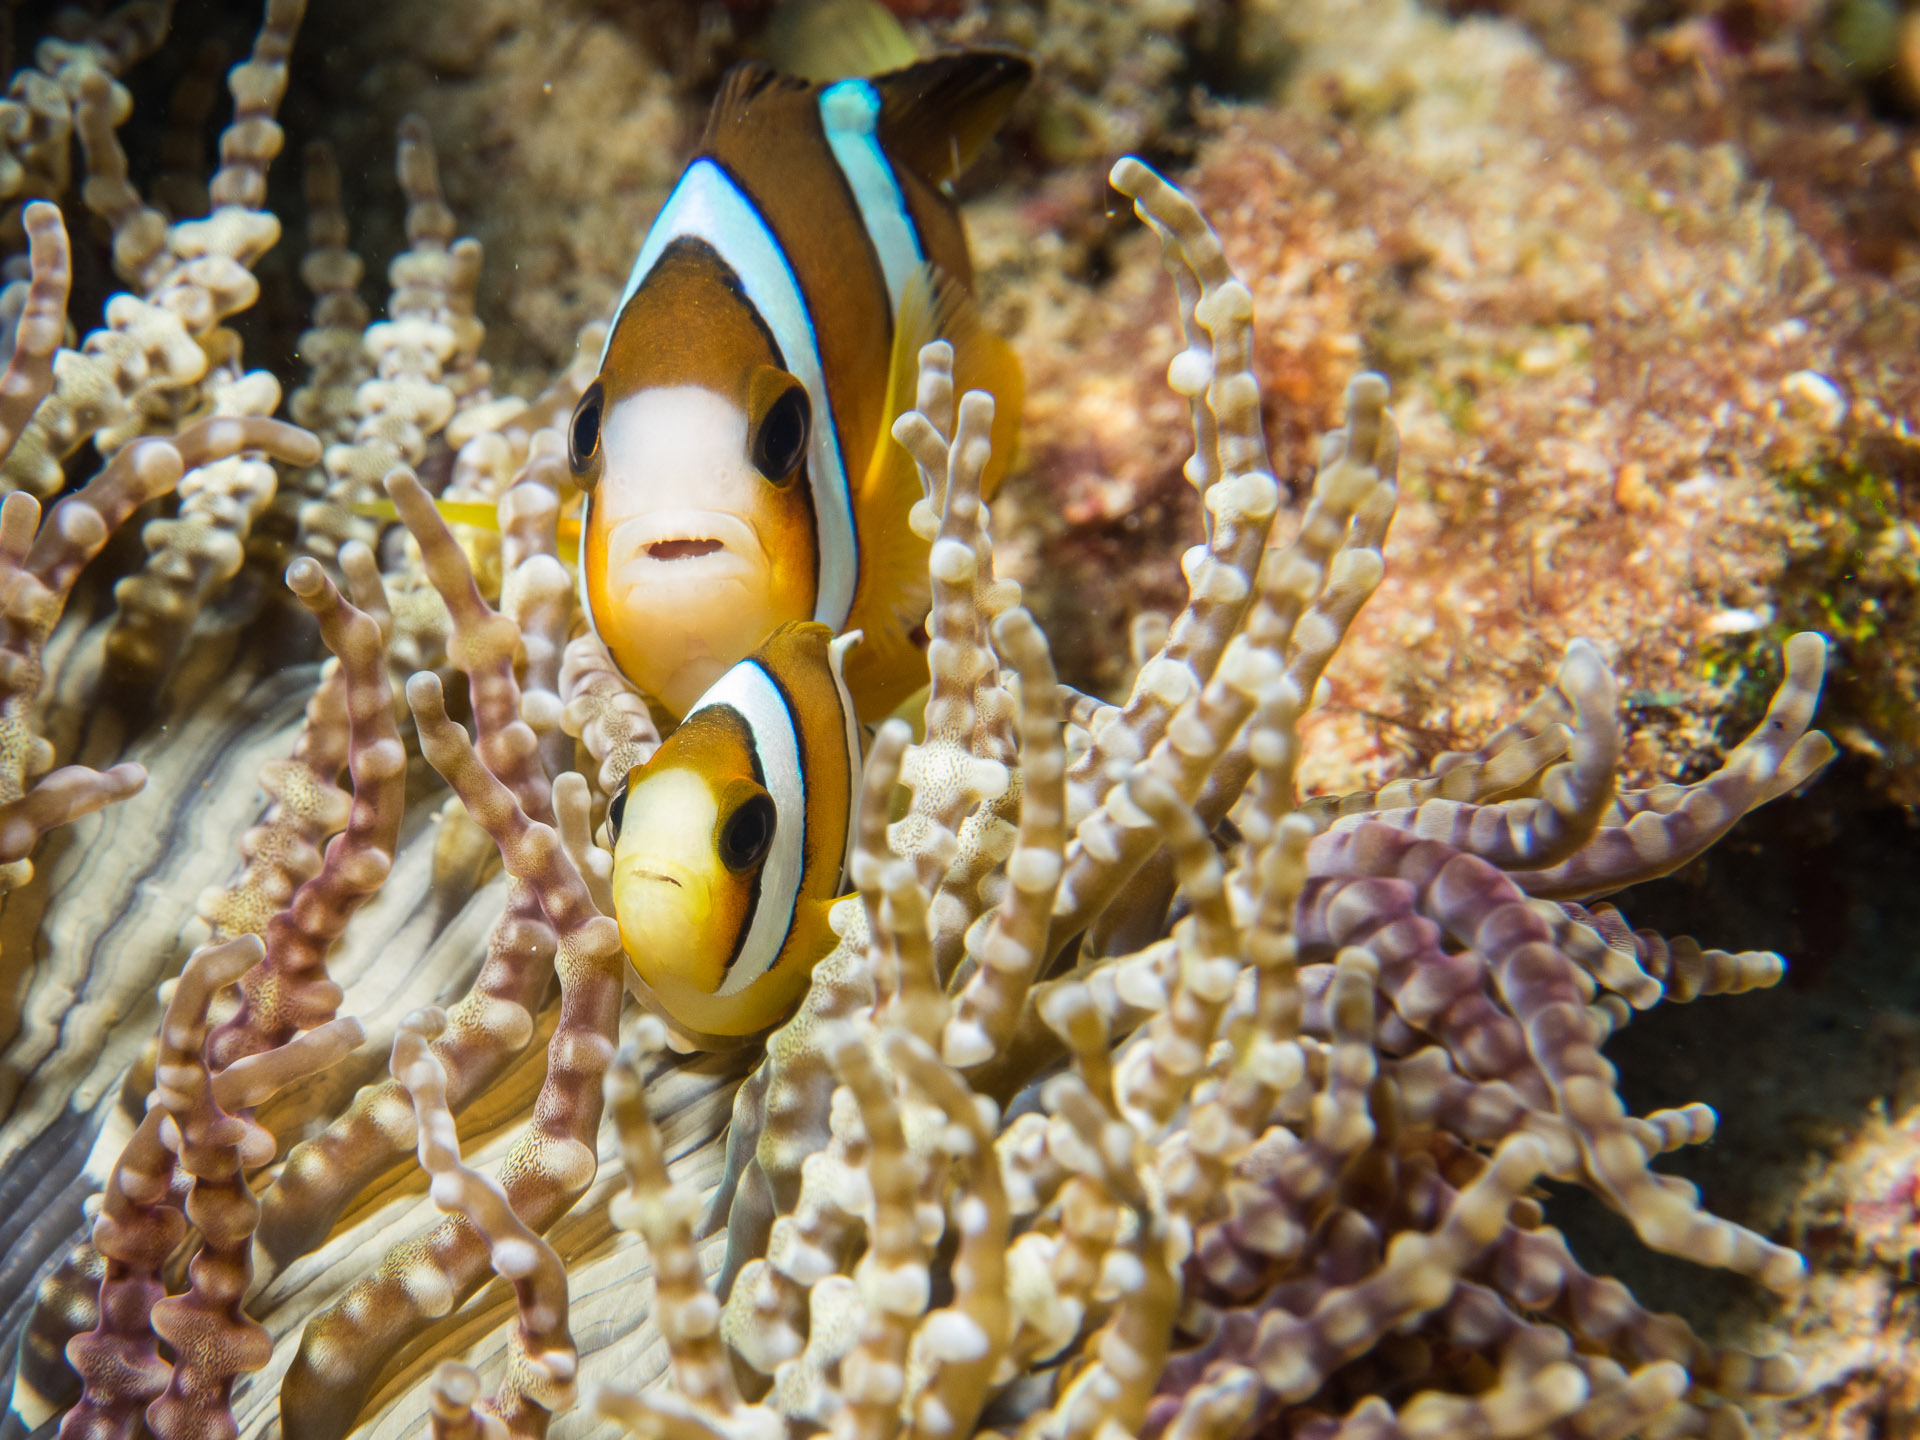 Common clownfish in anemone